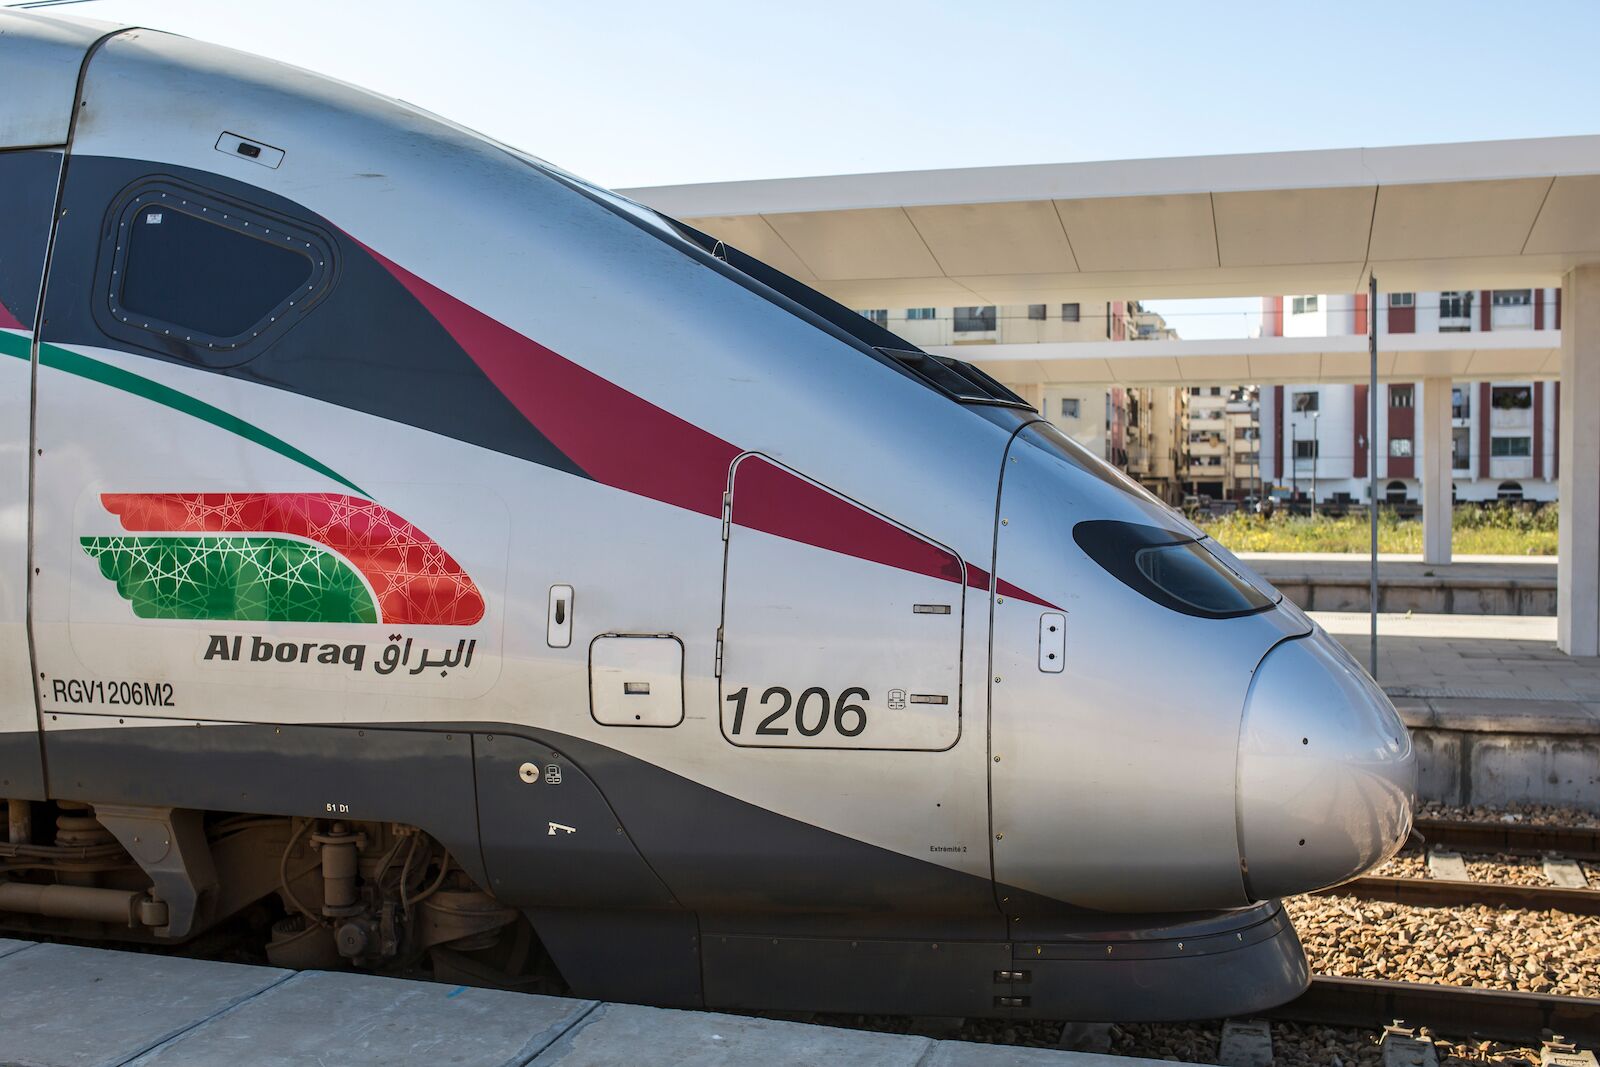 The Al Boraq high-speed train in Morocco is the fastest train in Africa